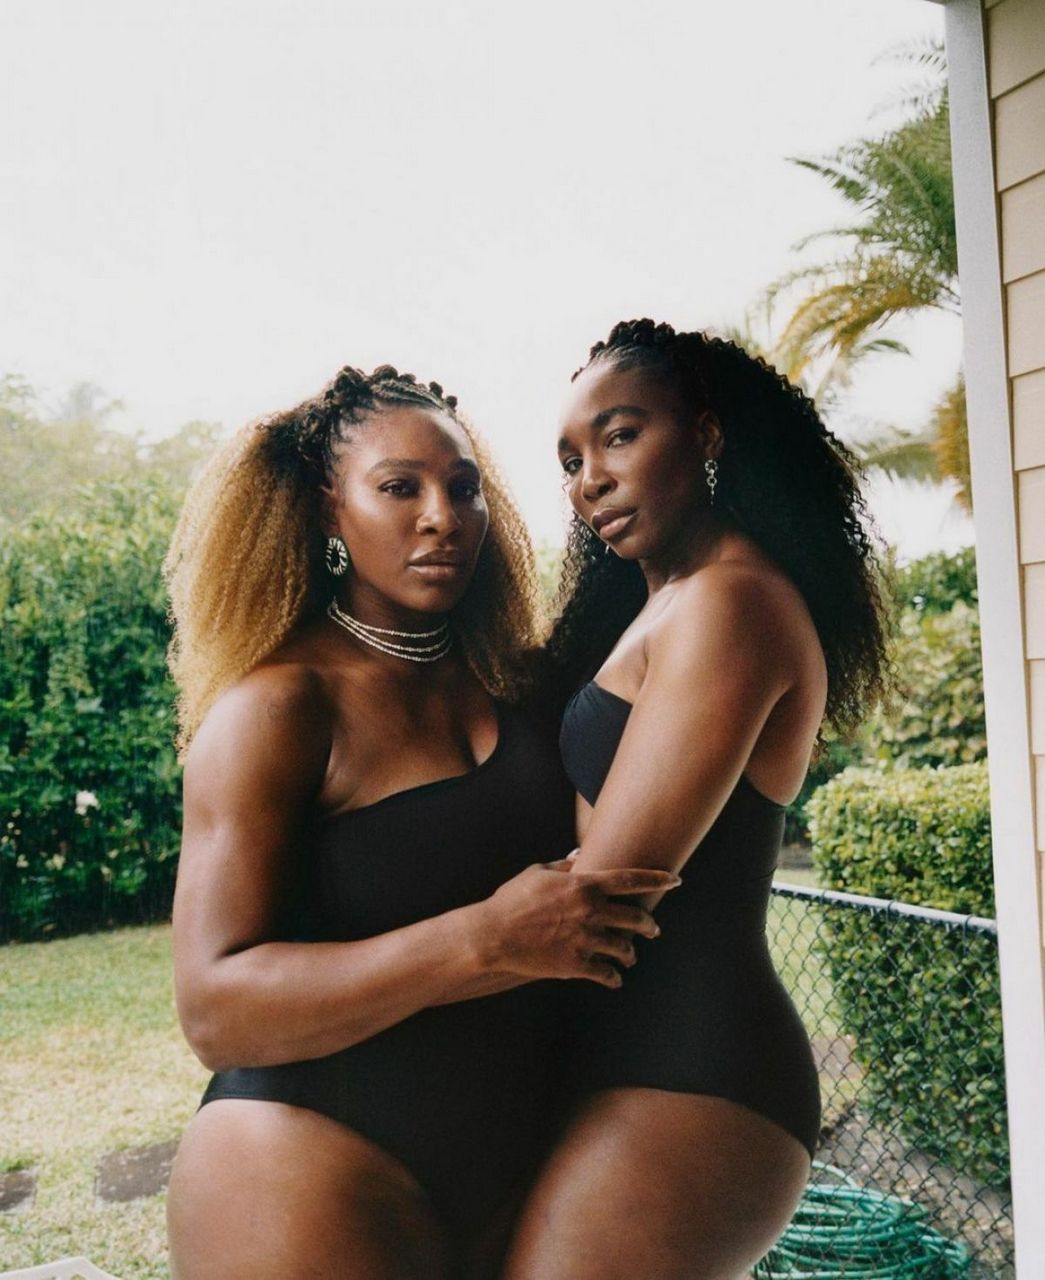 Serena And Venus Williams For Harper S Bazaar Legacy Issue